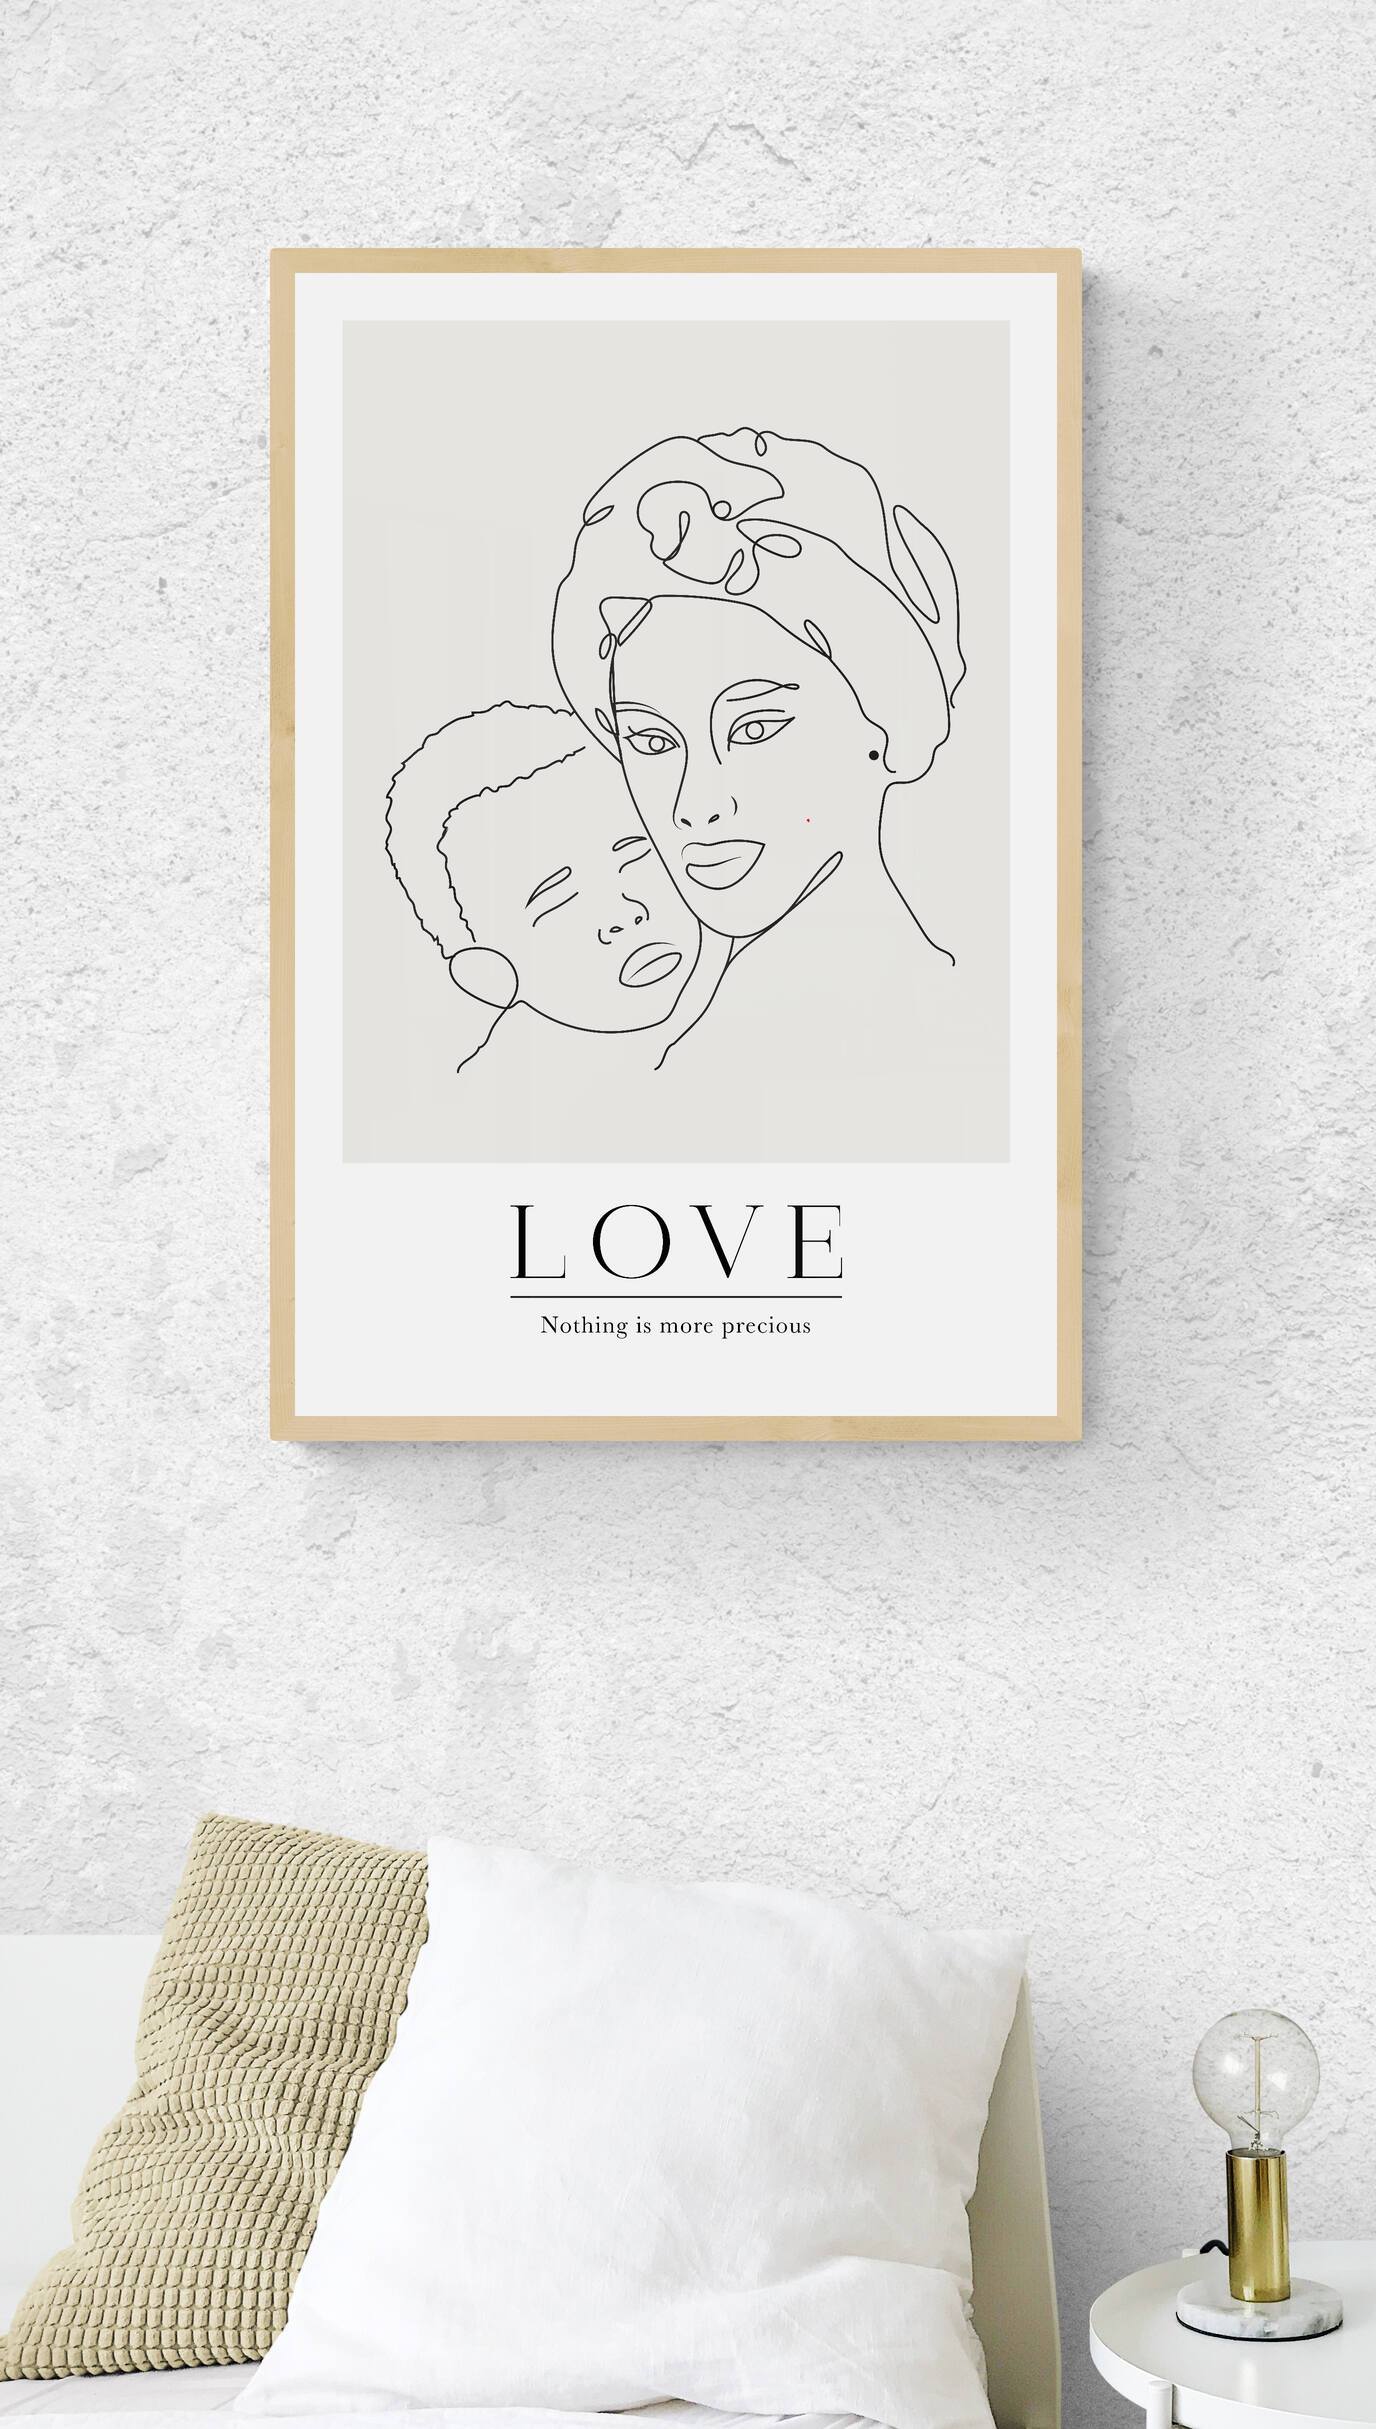 Love is Precious White Framed Art Print